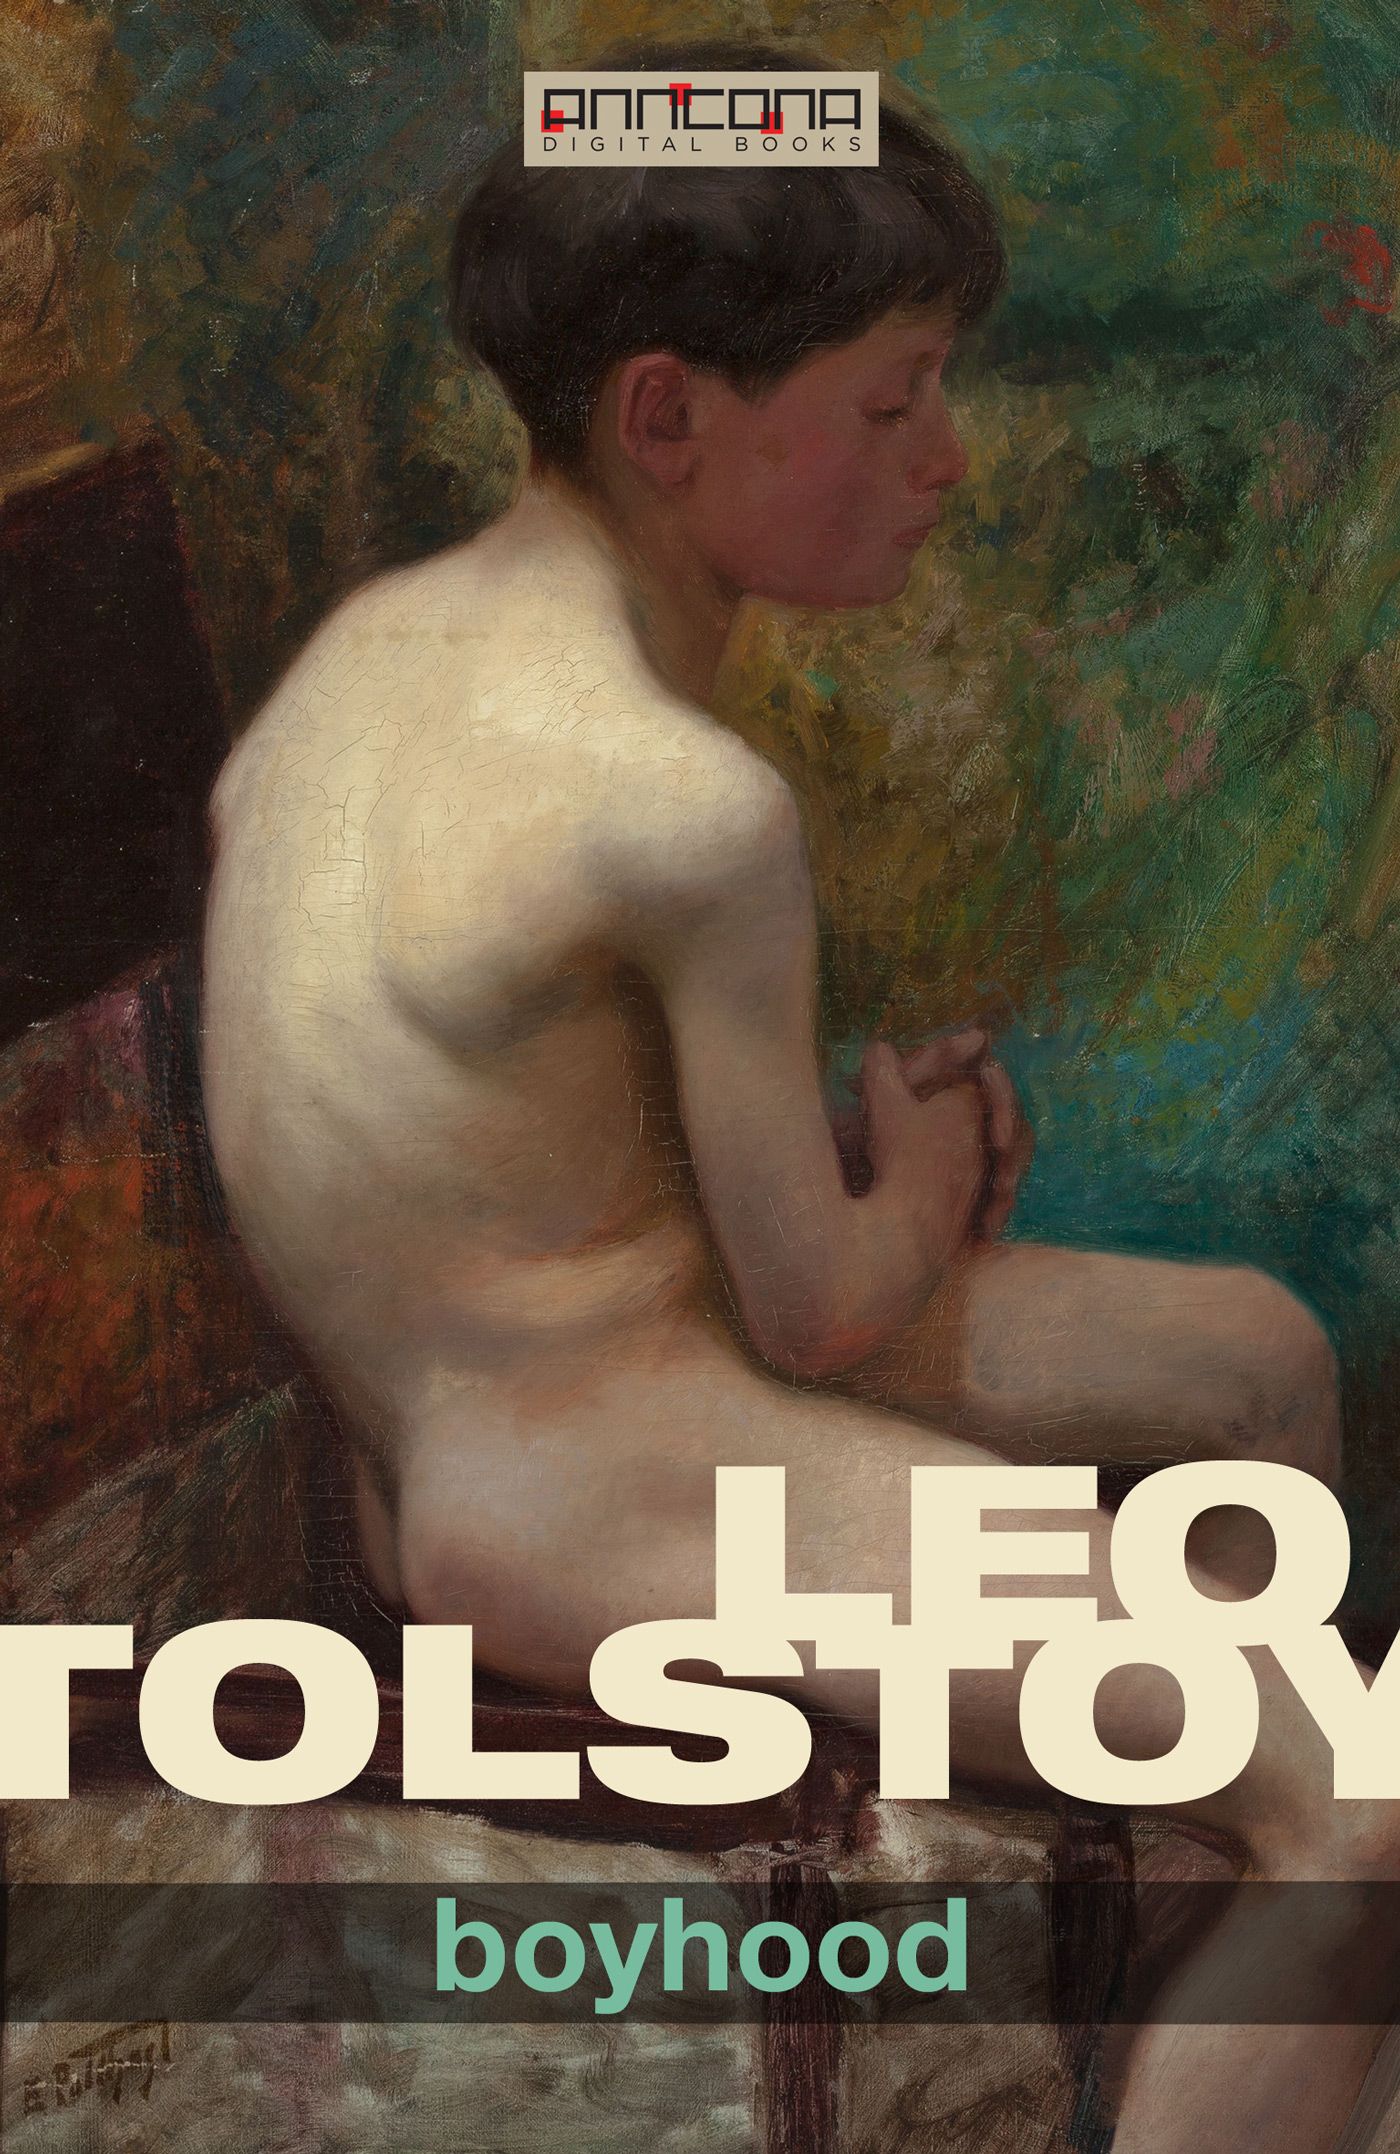 Boyhood, eBook by Leo Tolstoy